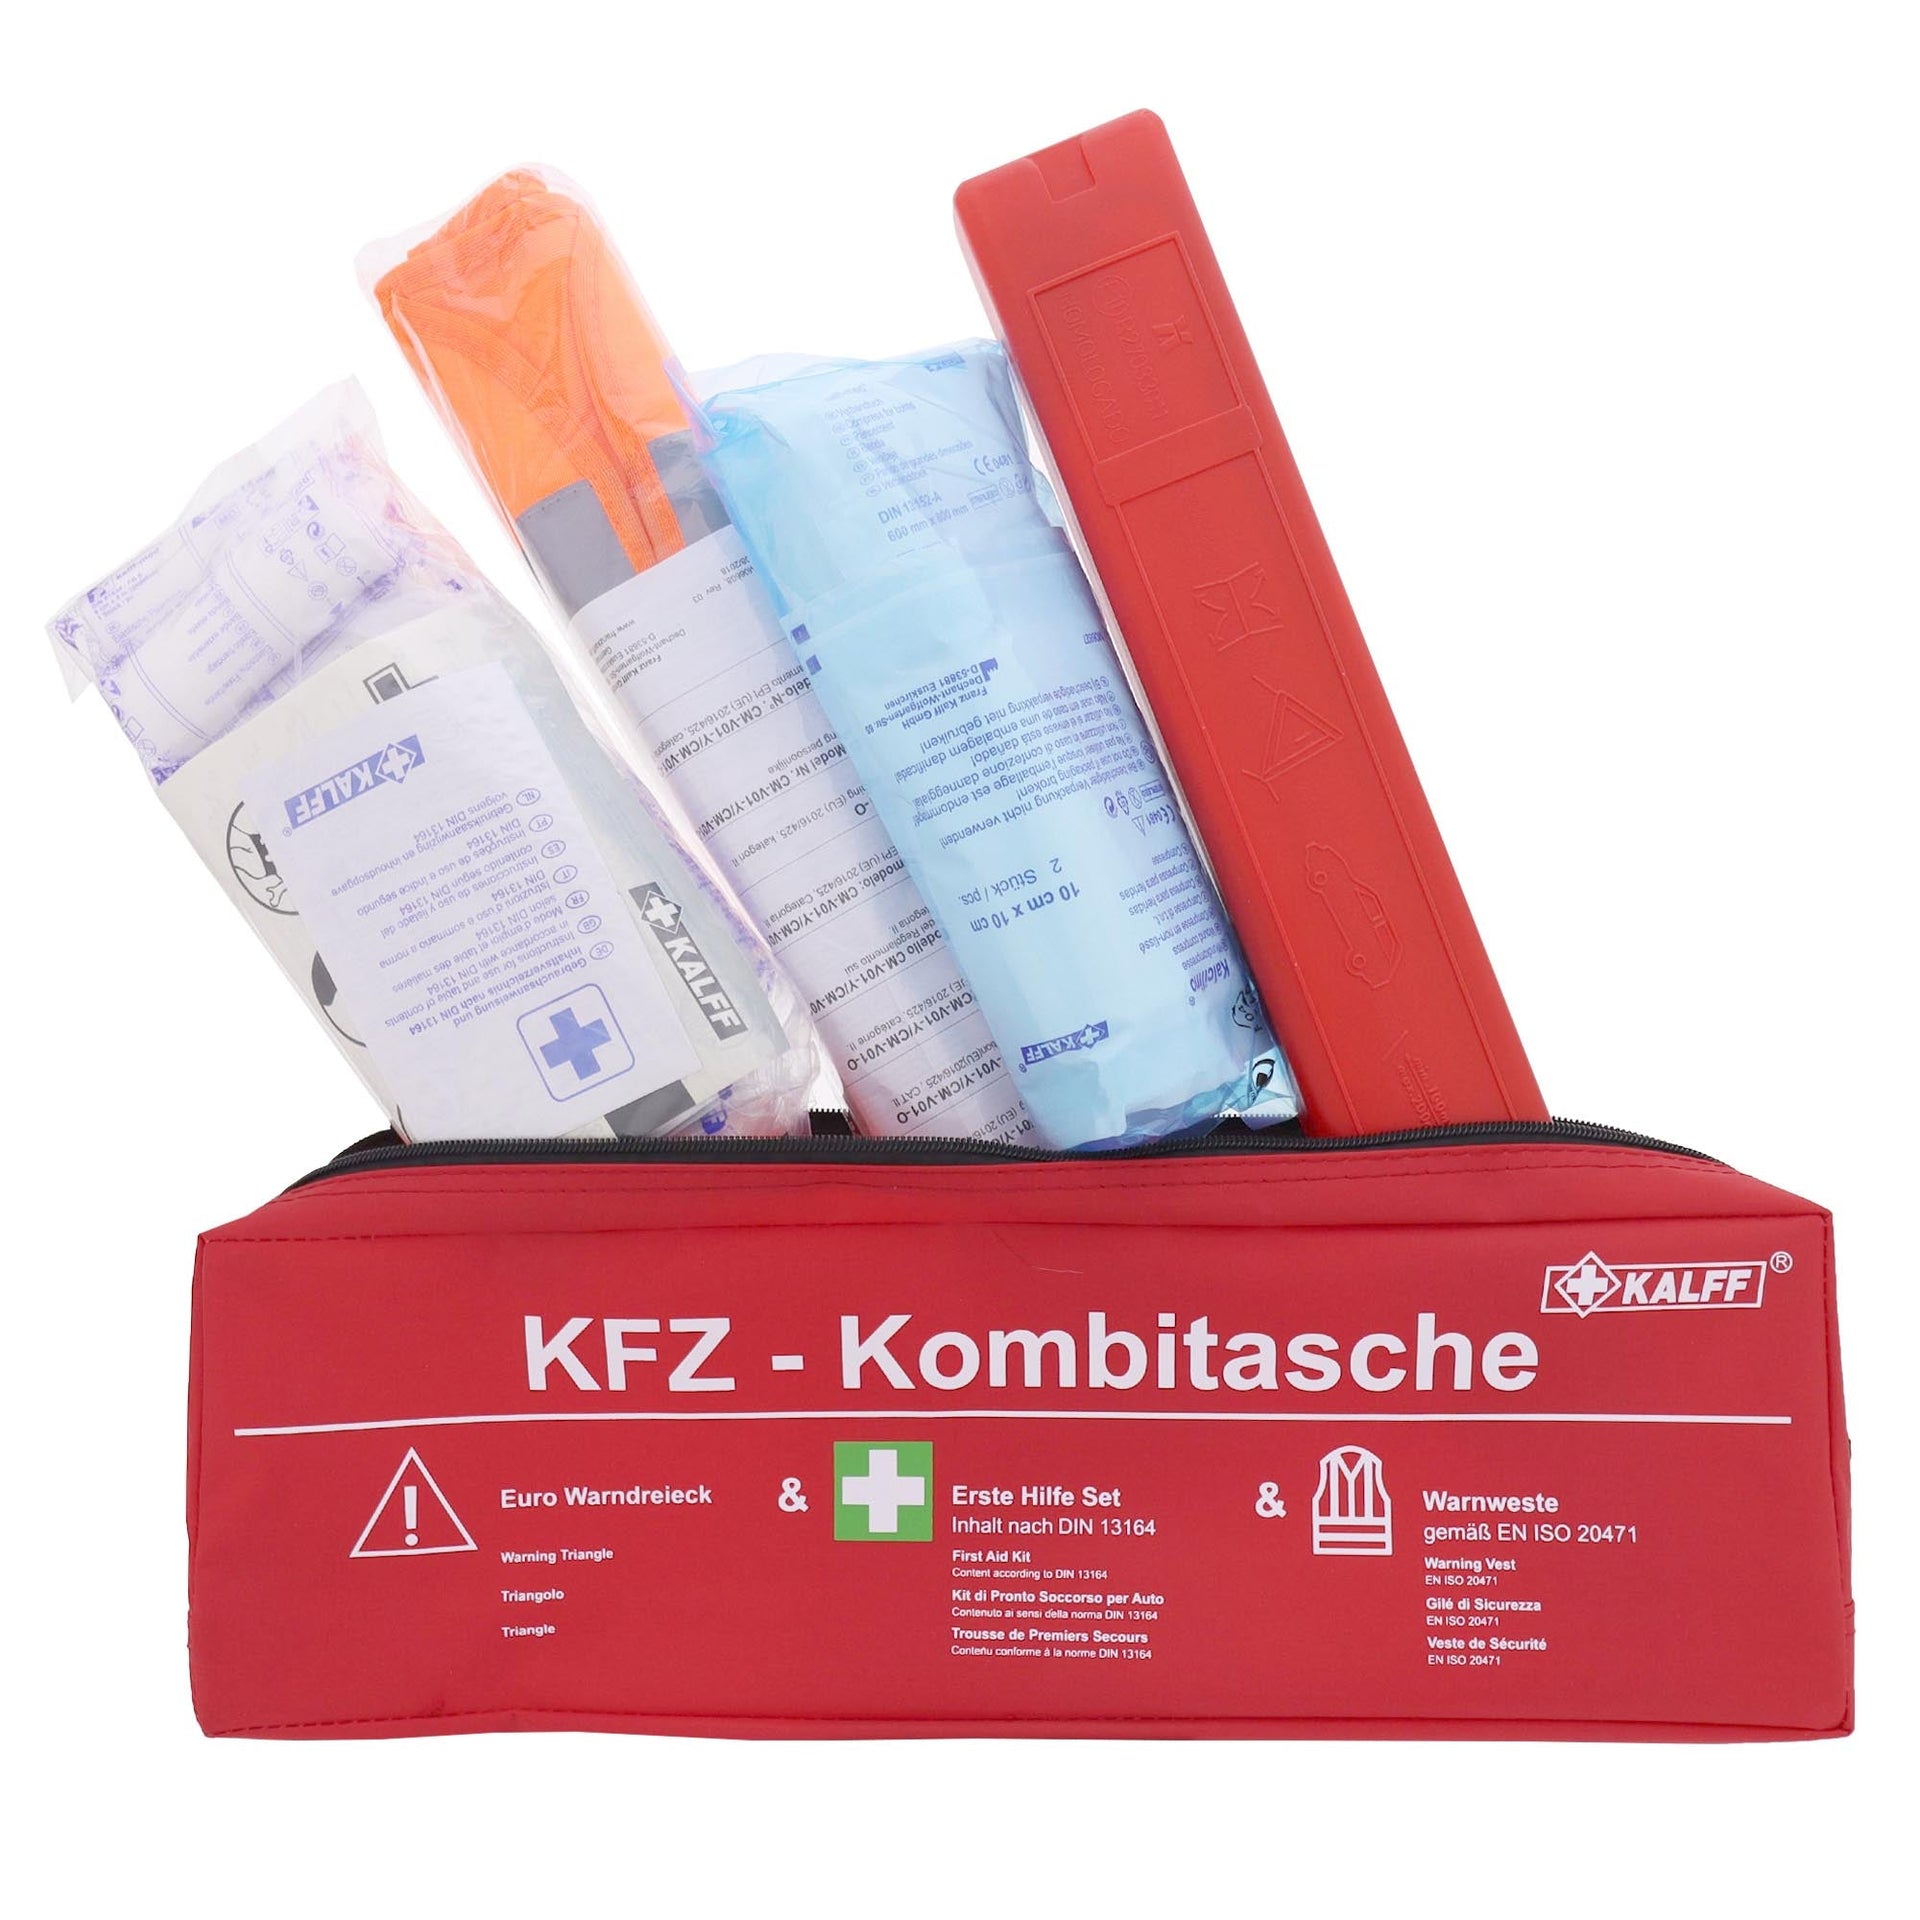 KFZ-Verbandtasche COMPACT DIN 13164:2022